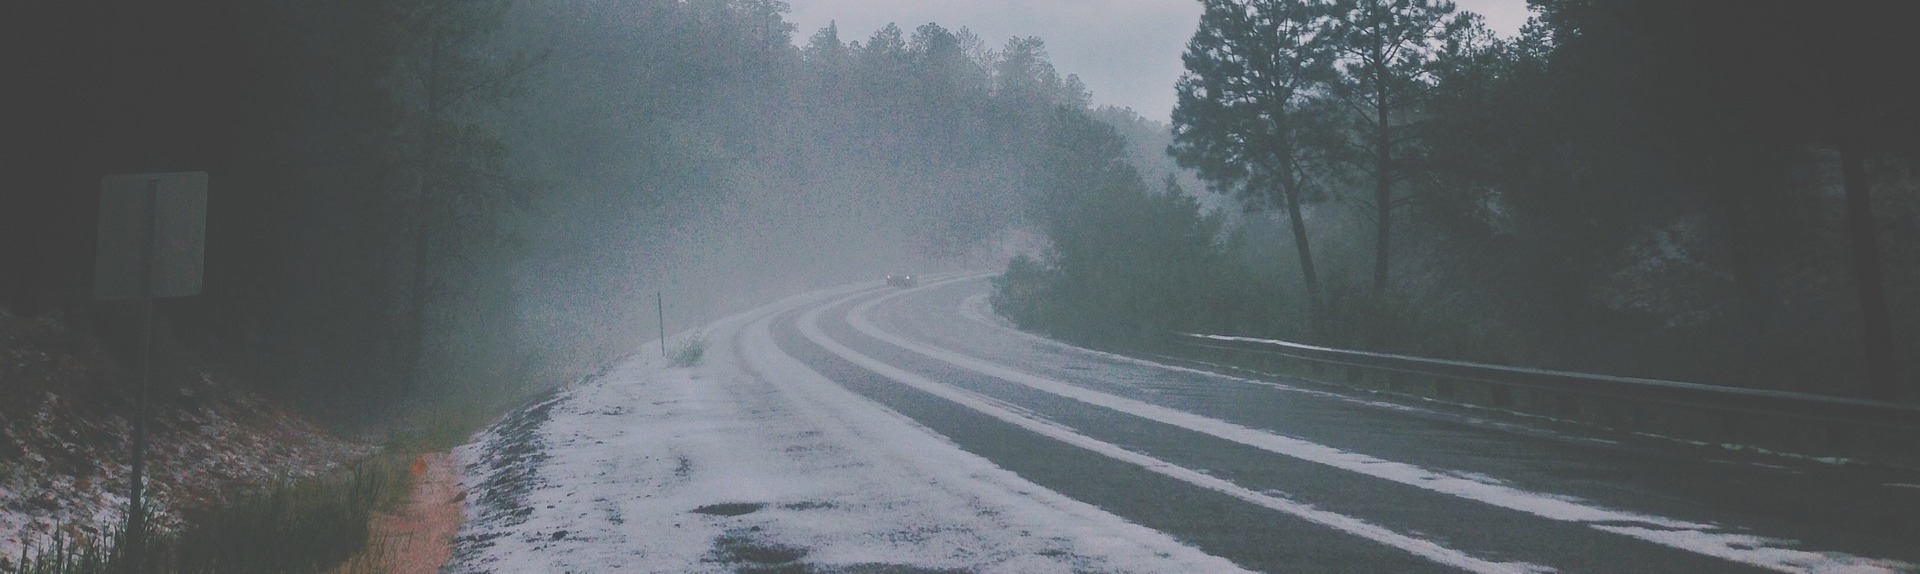 driving snow storm dangerous road conditions